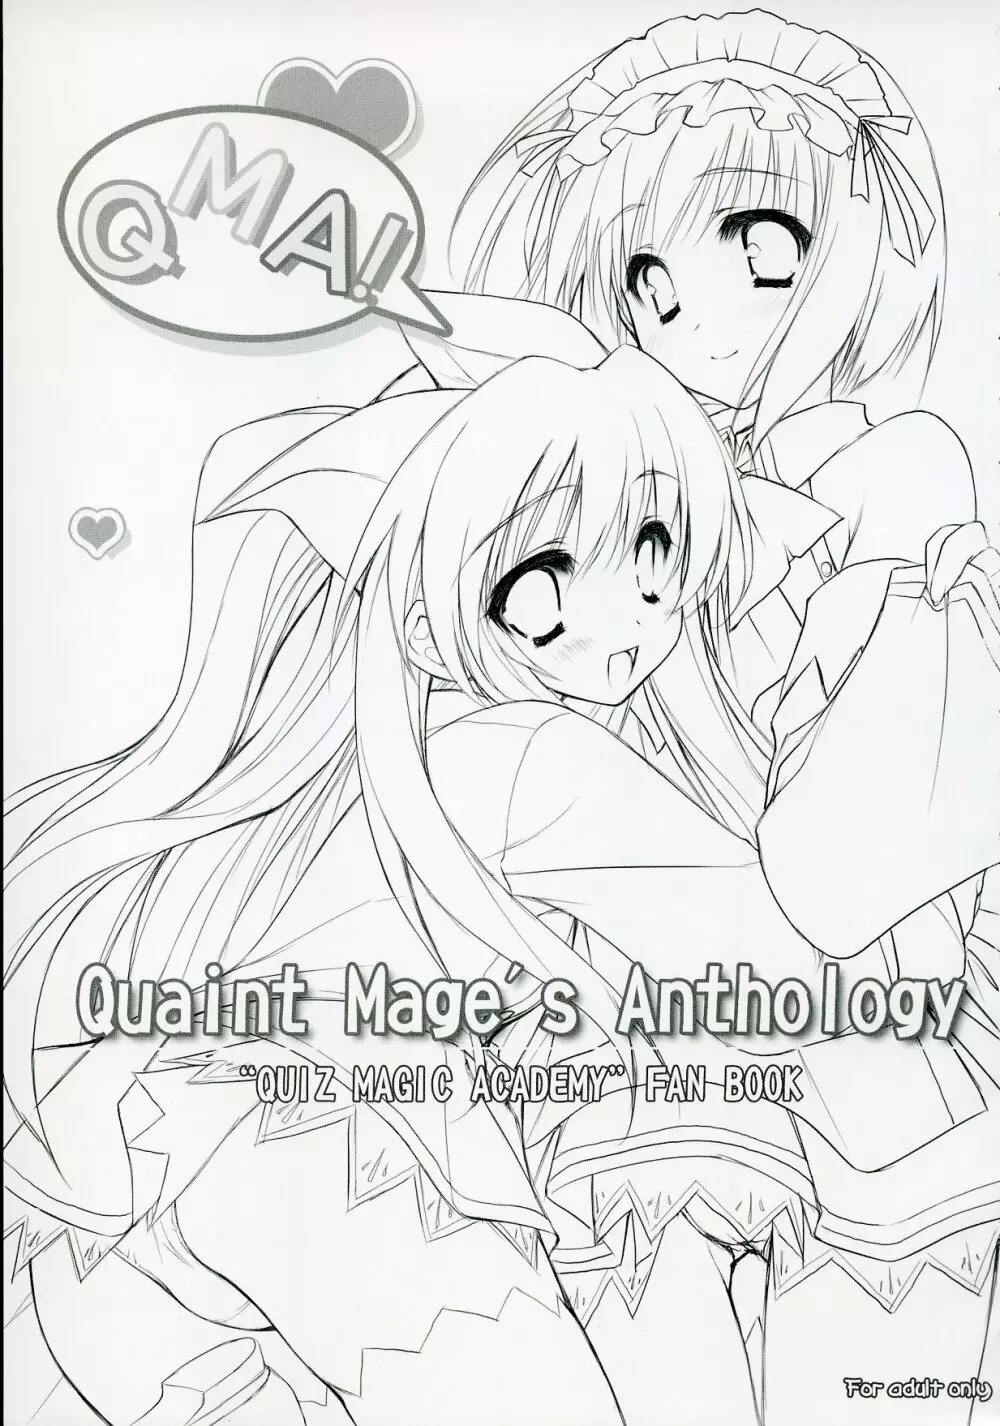 Quaint Mage's Anthology - page2